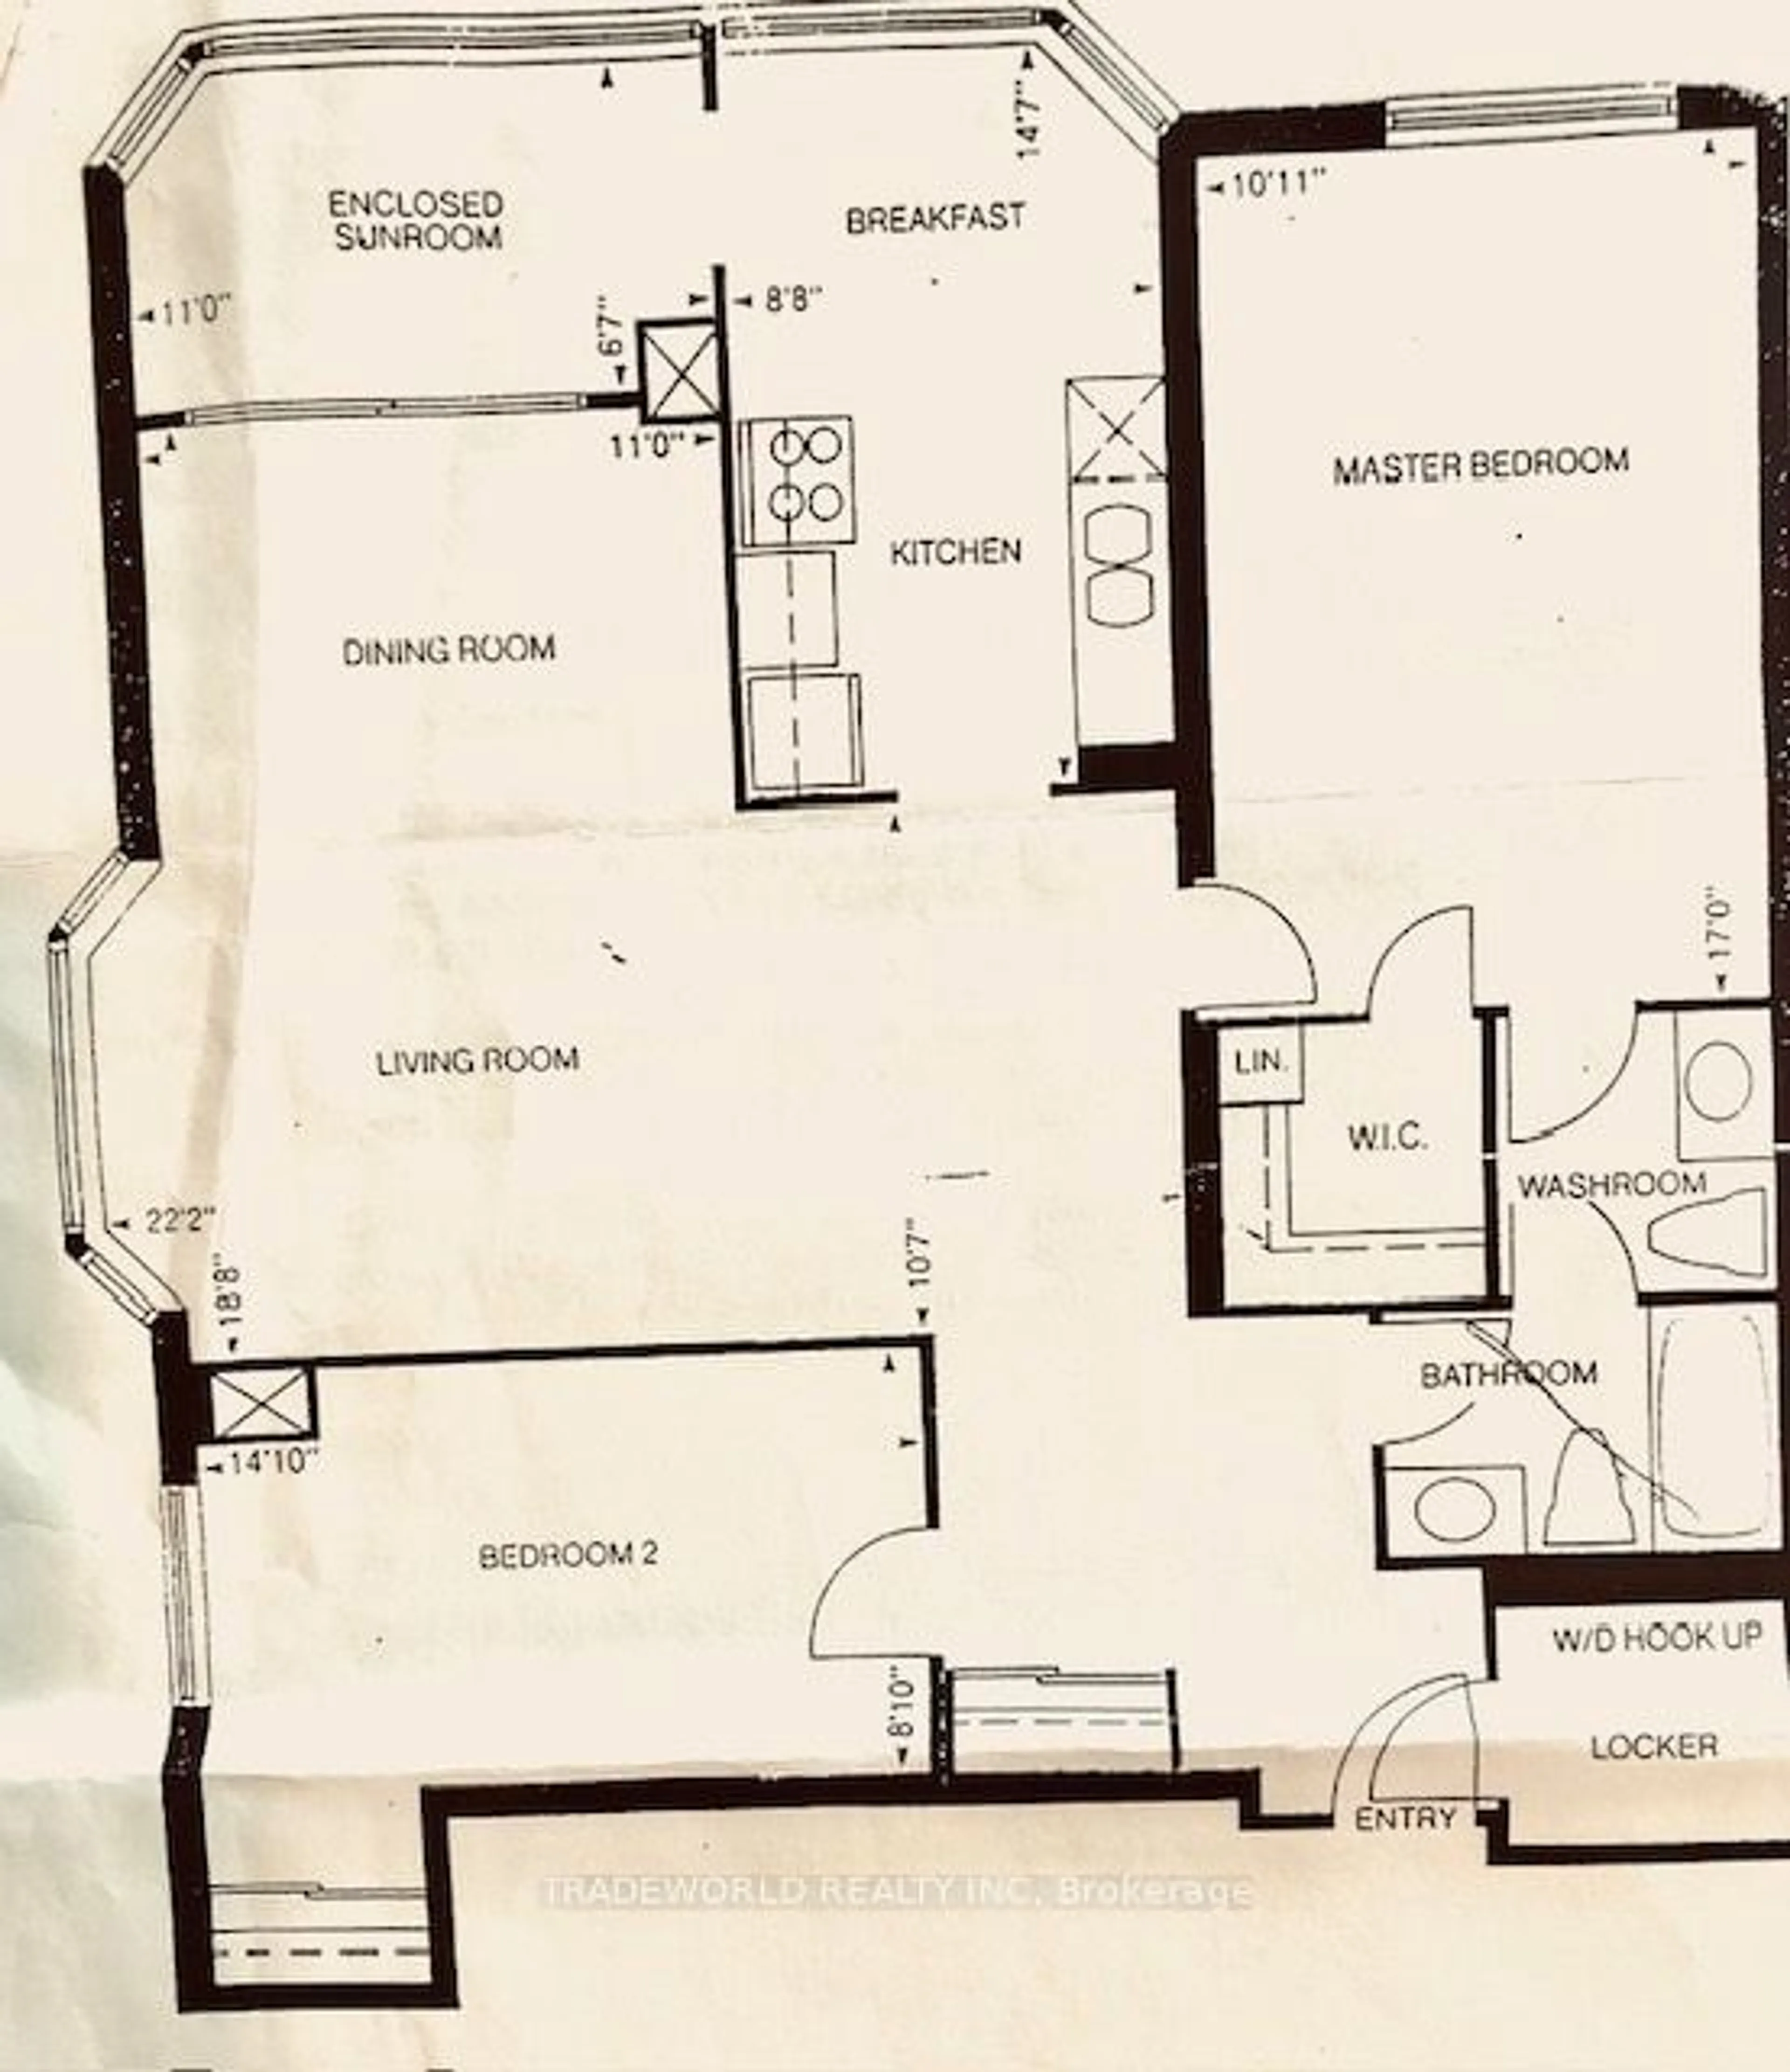 Floor plan for 55 Bamburgh Circ #711, Toronto Ontario M1W 3V4